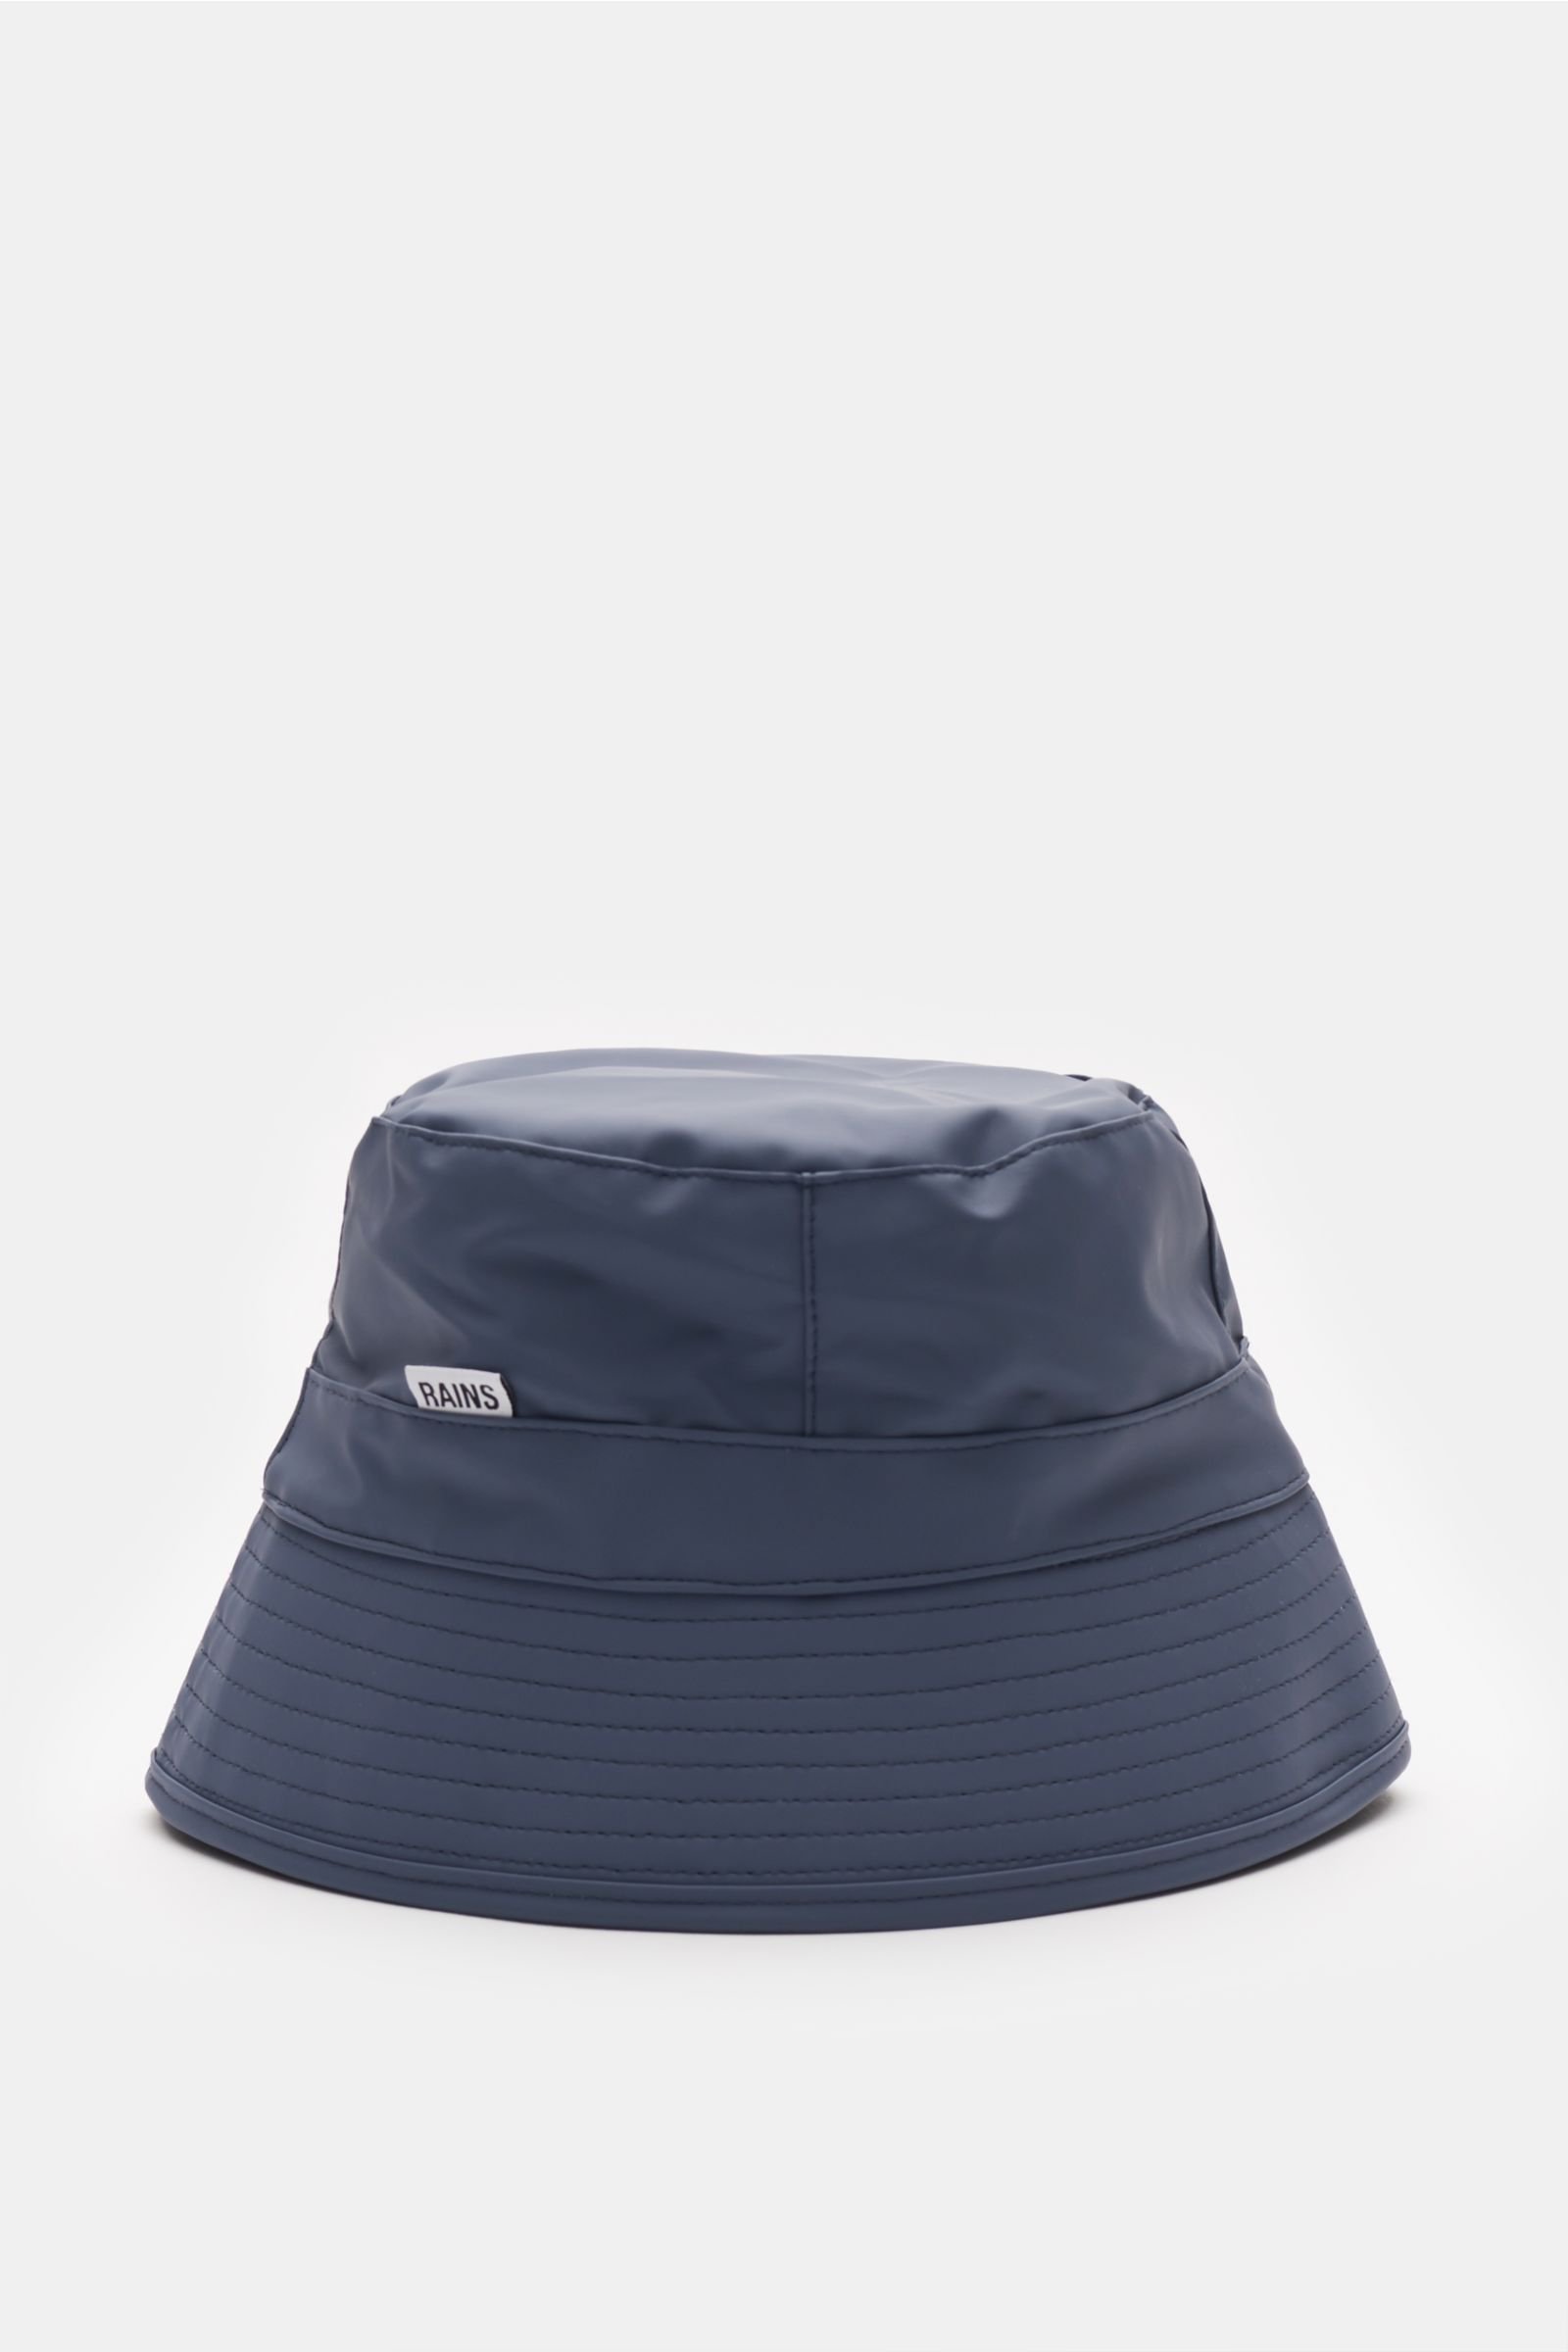 Bucket hat grey-blue